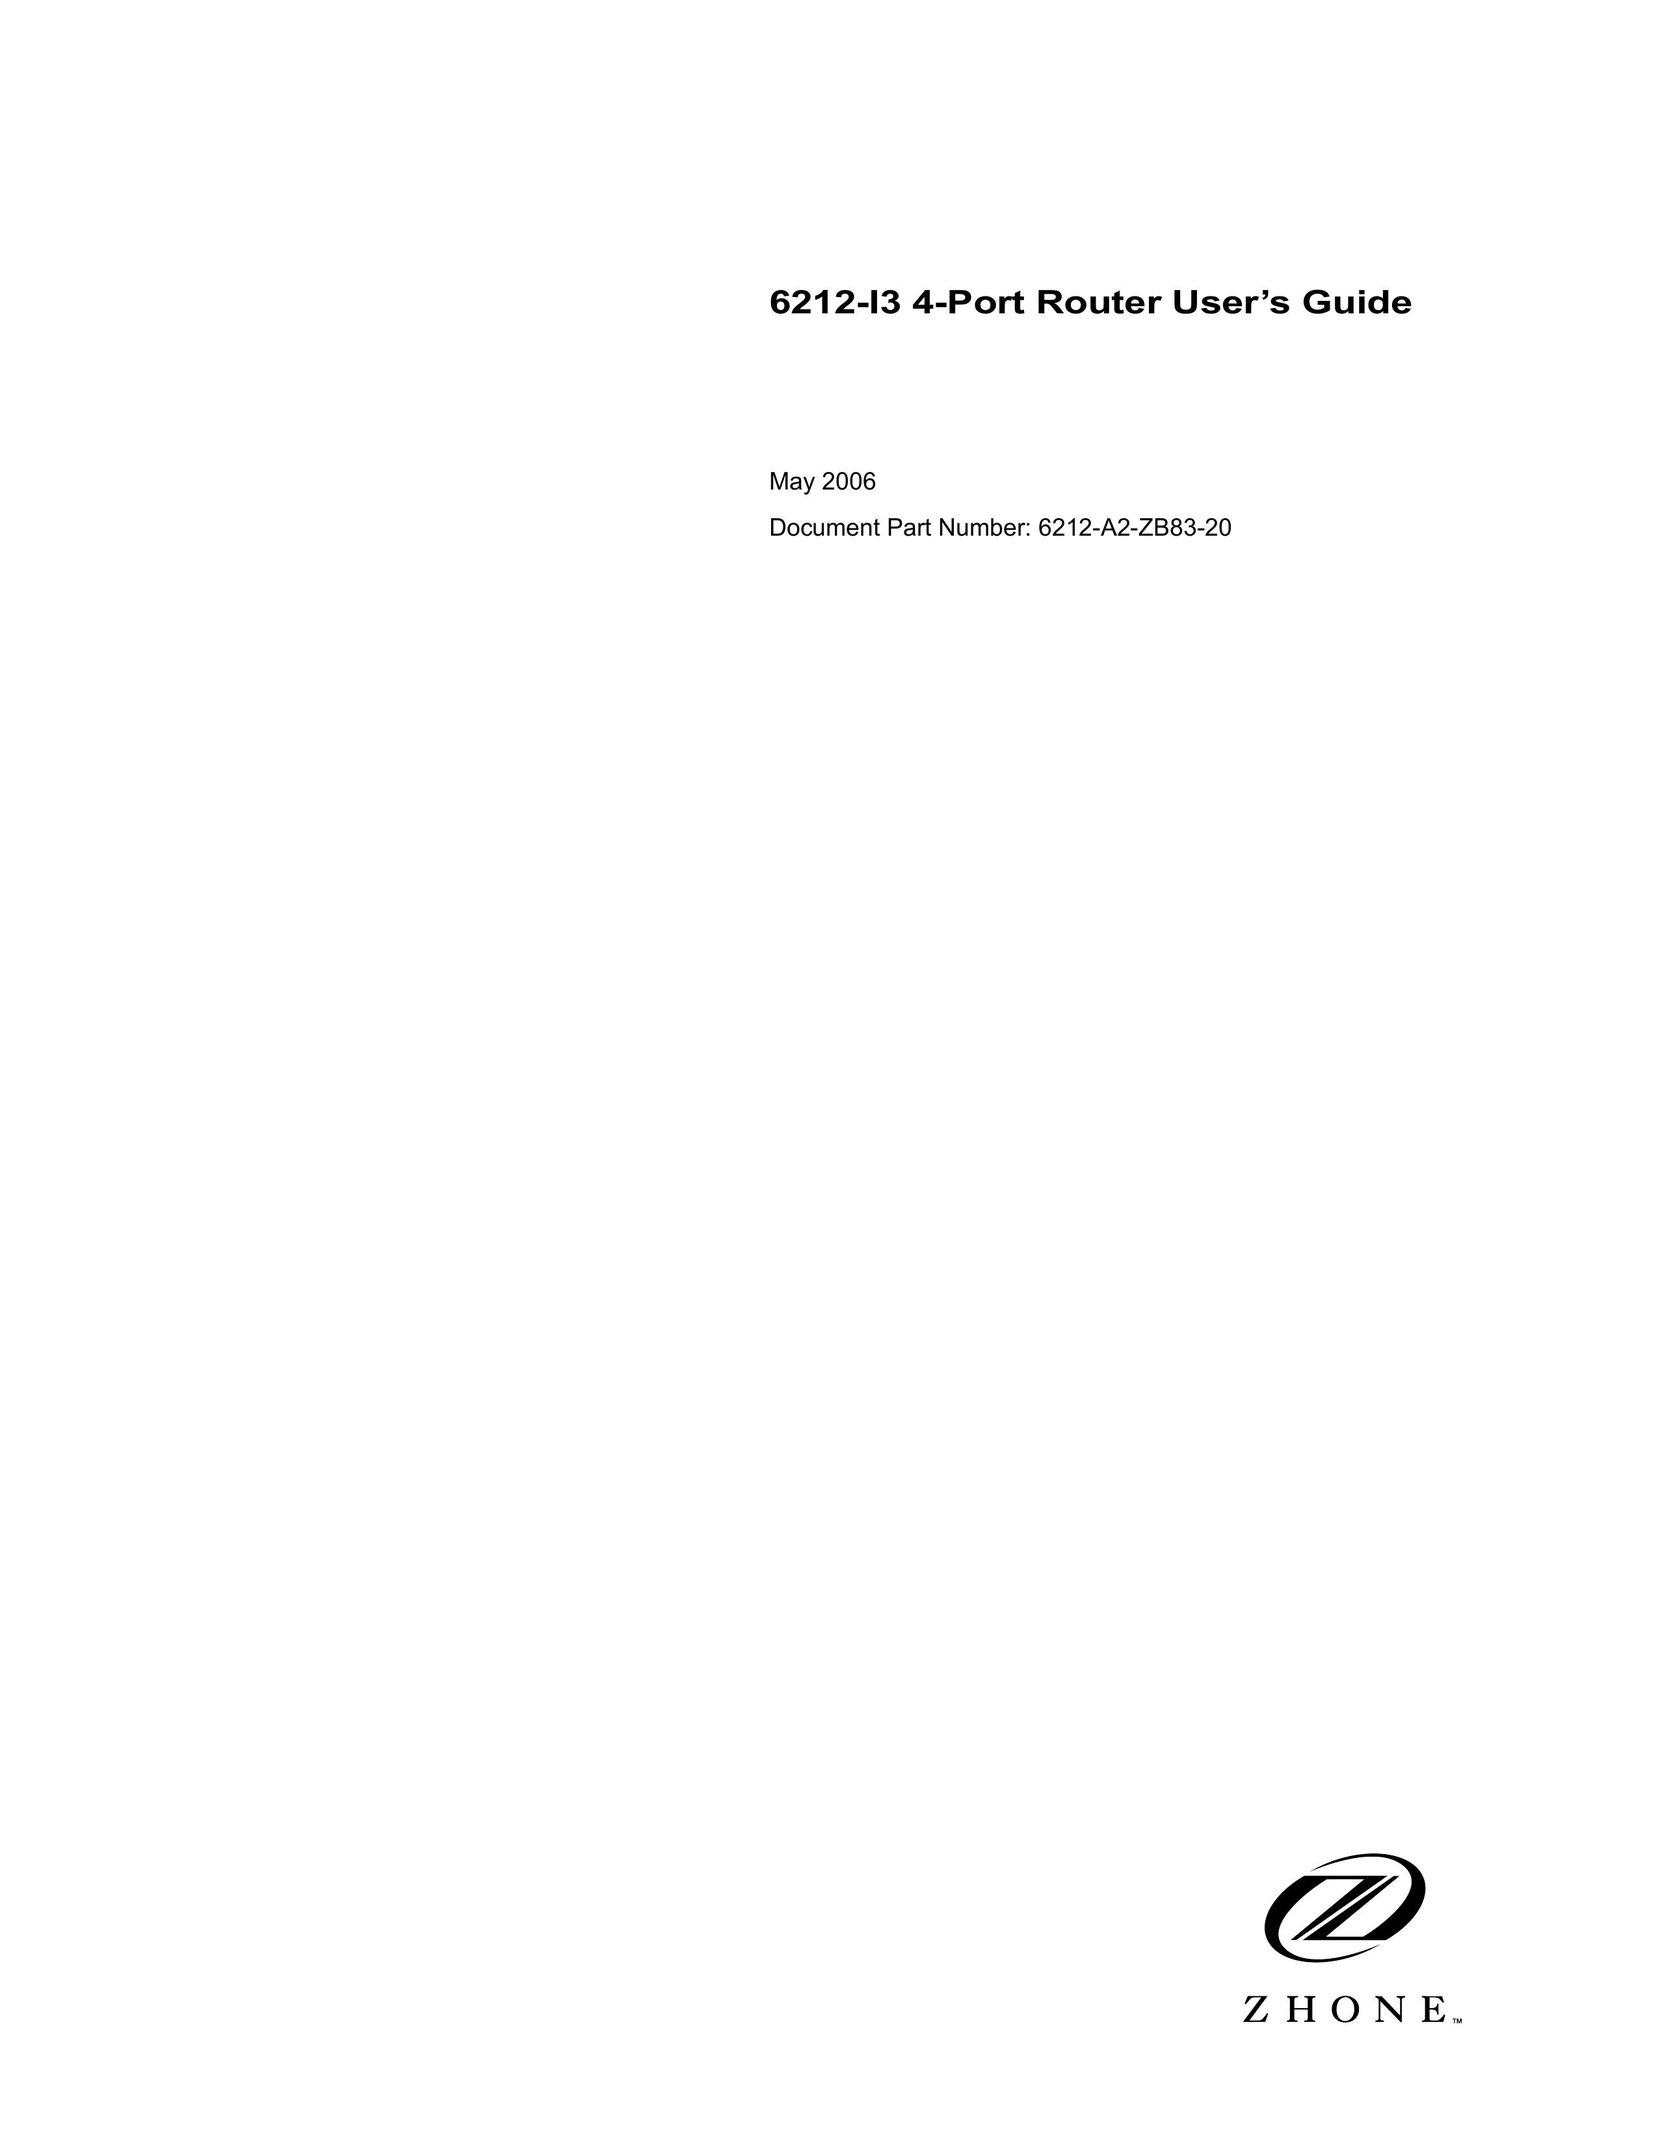 Zhone Technologies 6213 Network Router User Manual